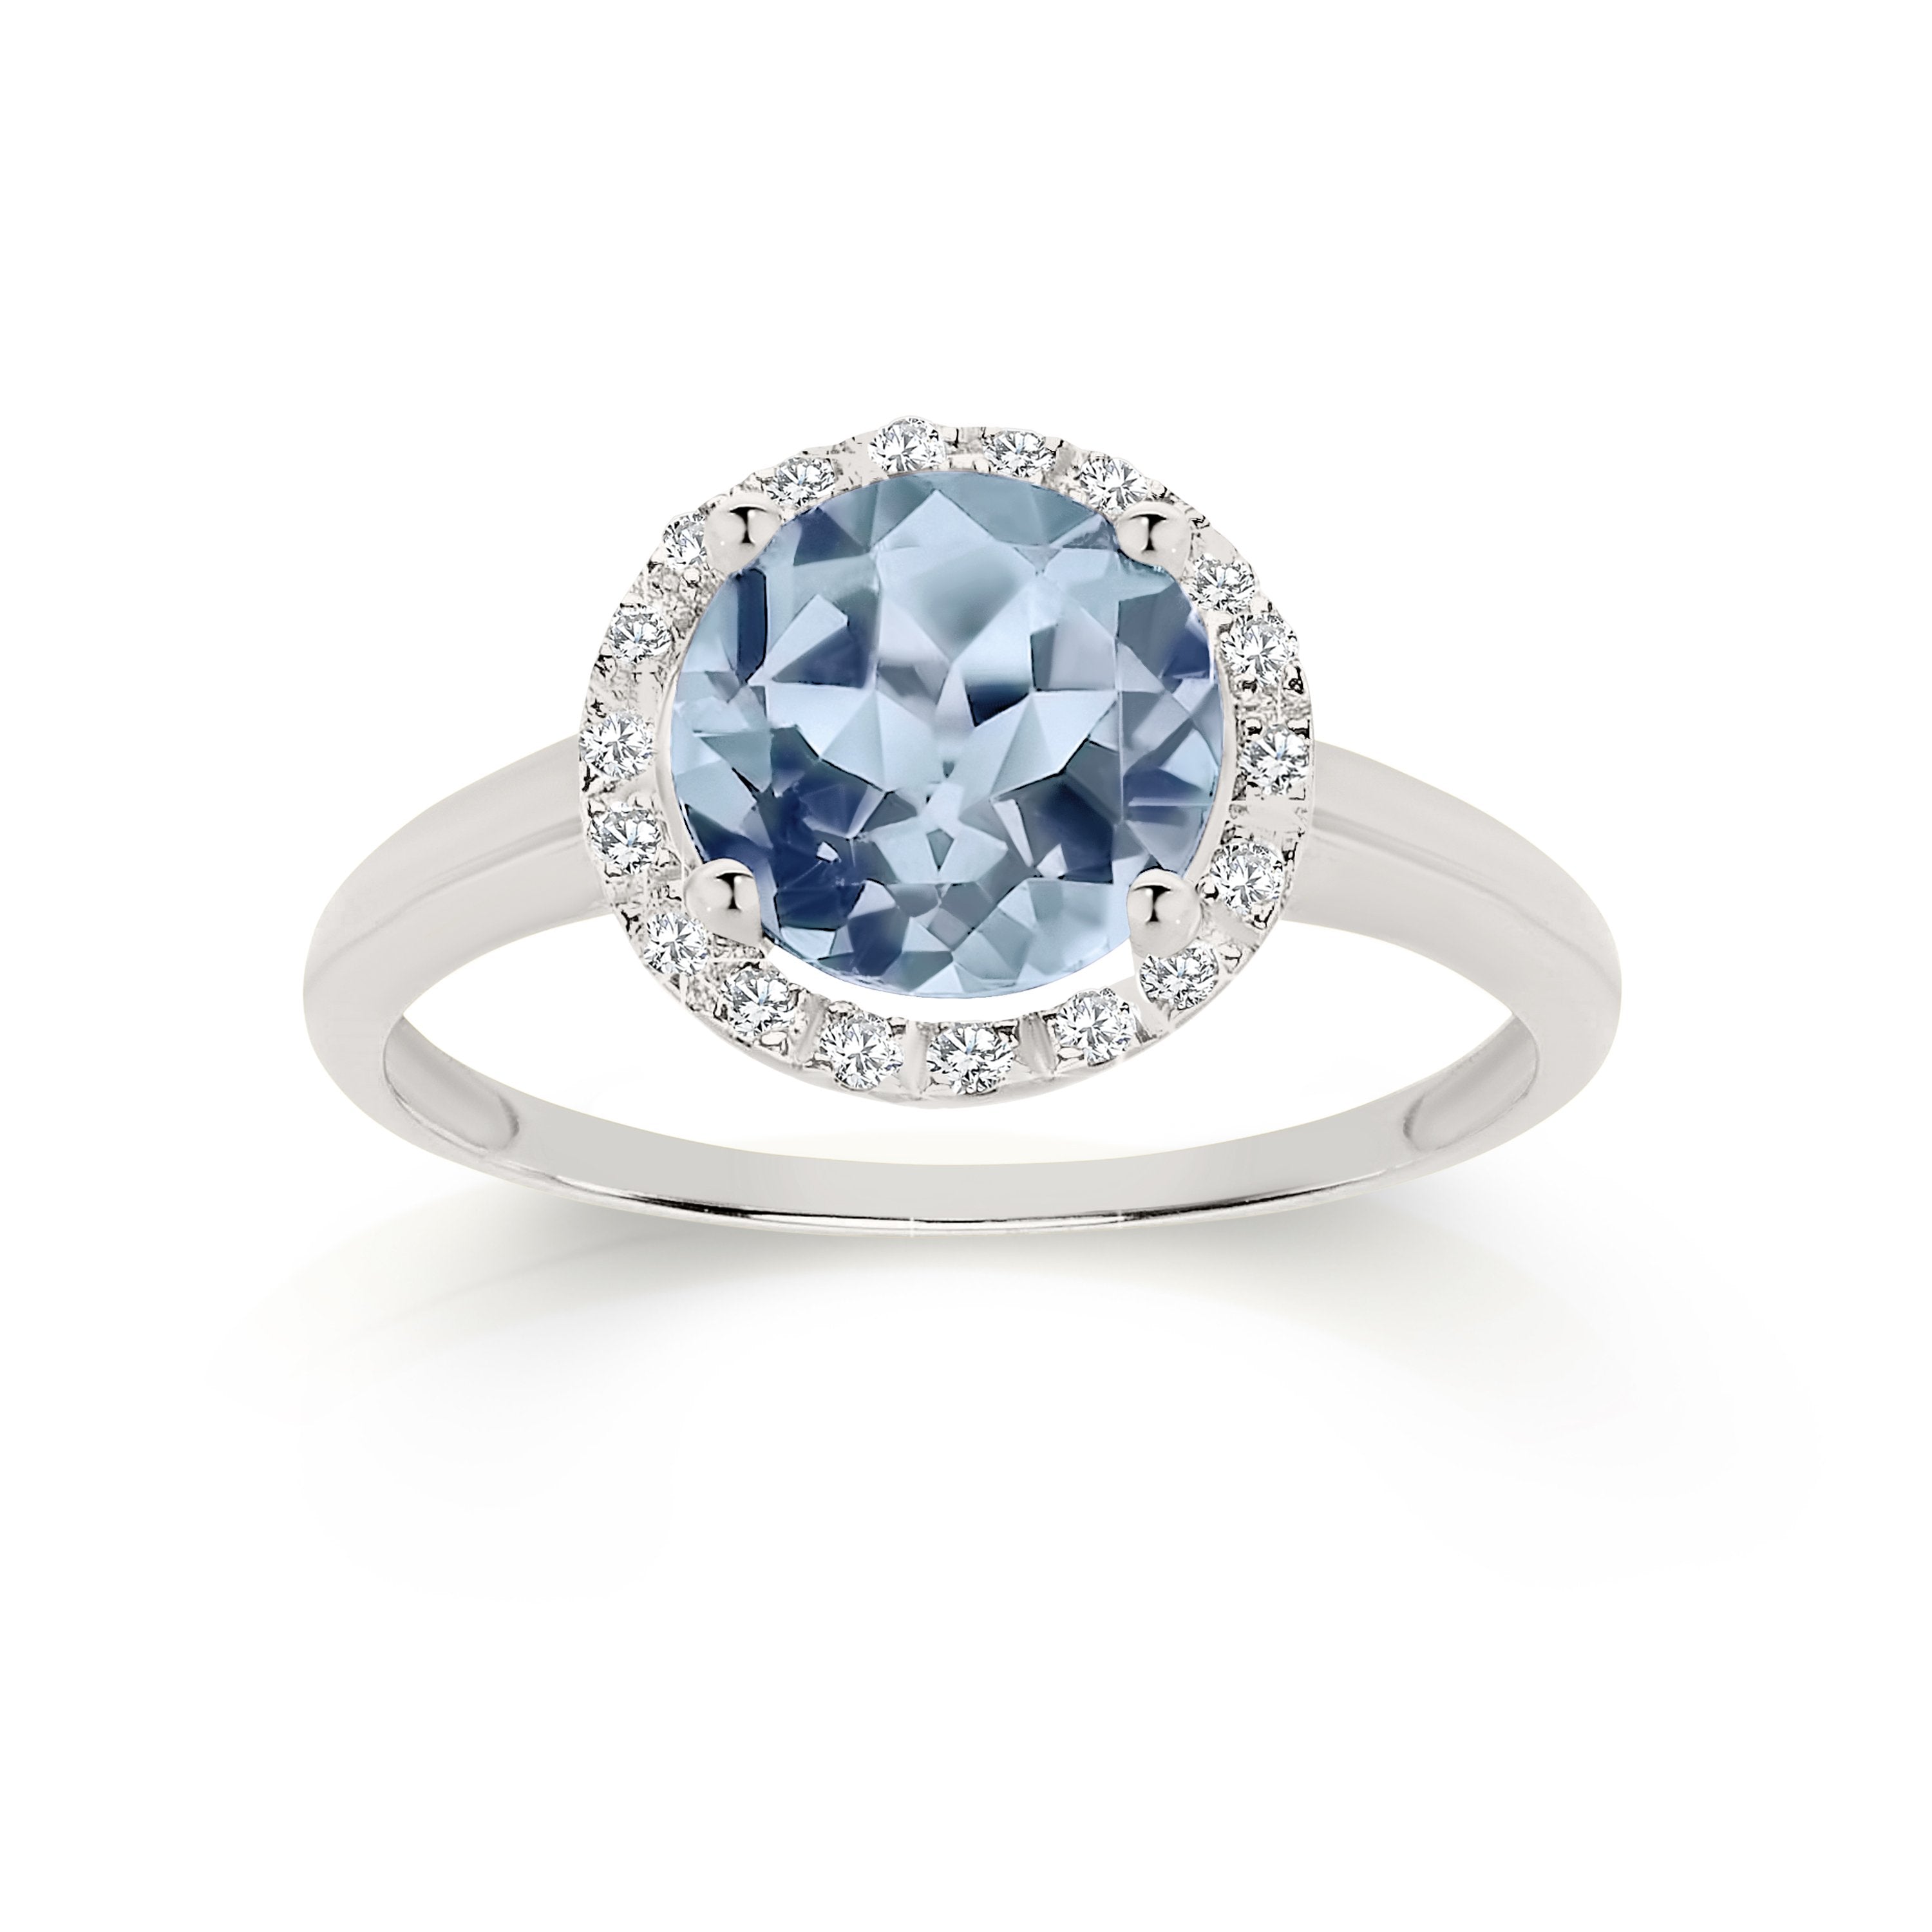 9ct white gold blue topaz and diamond ring